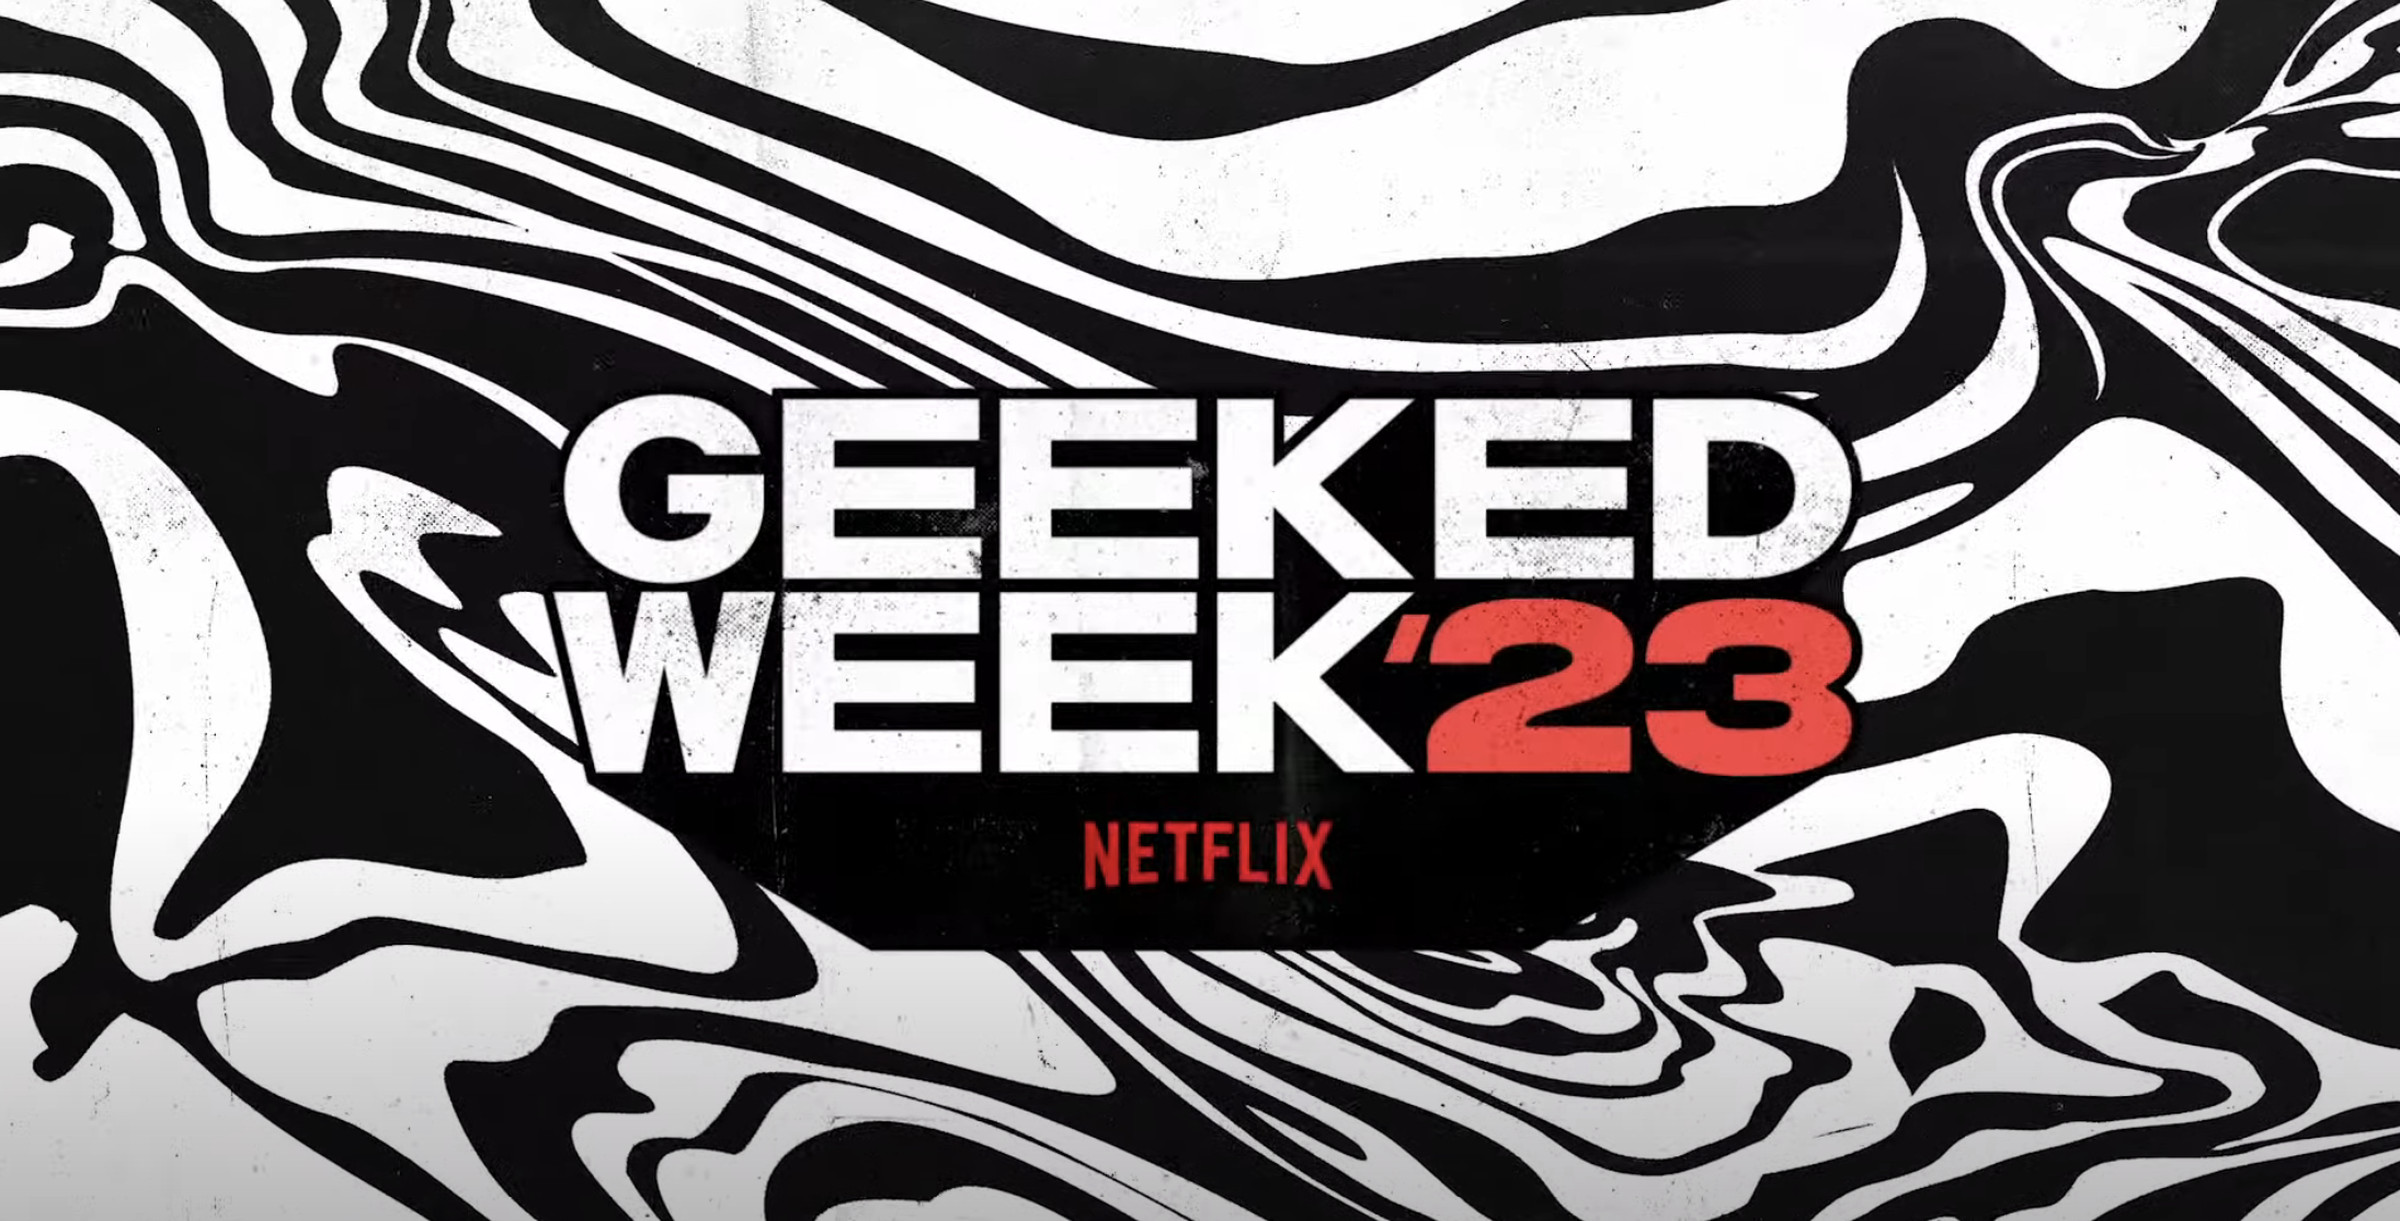 The logo for Netflix Geeked Week 2023.